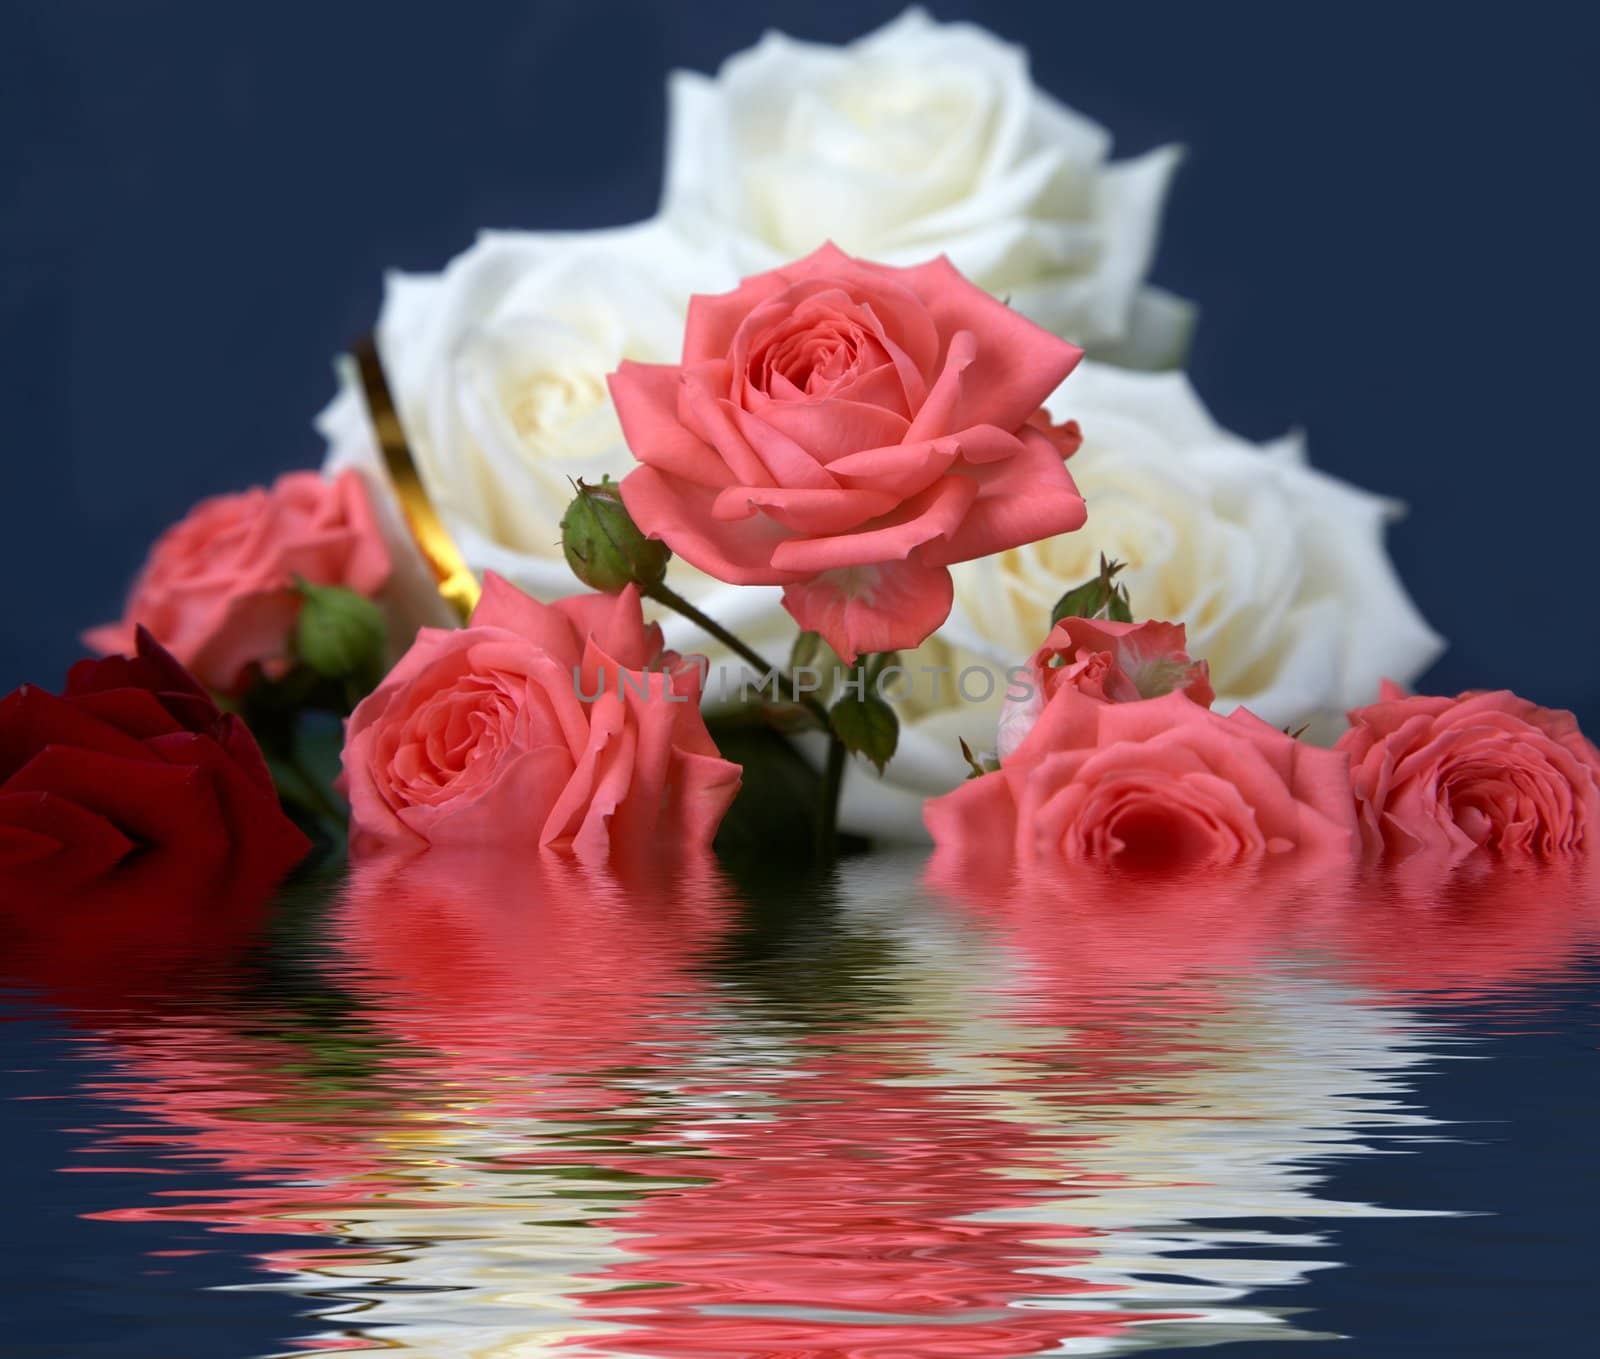 Roses in water by velkol